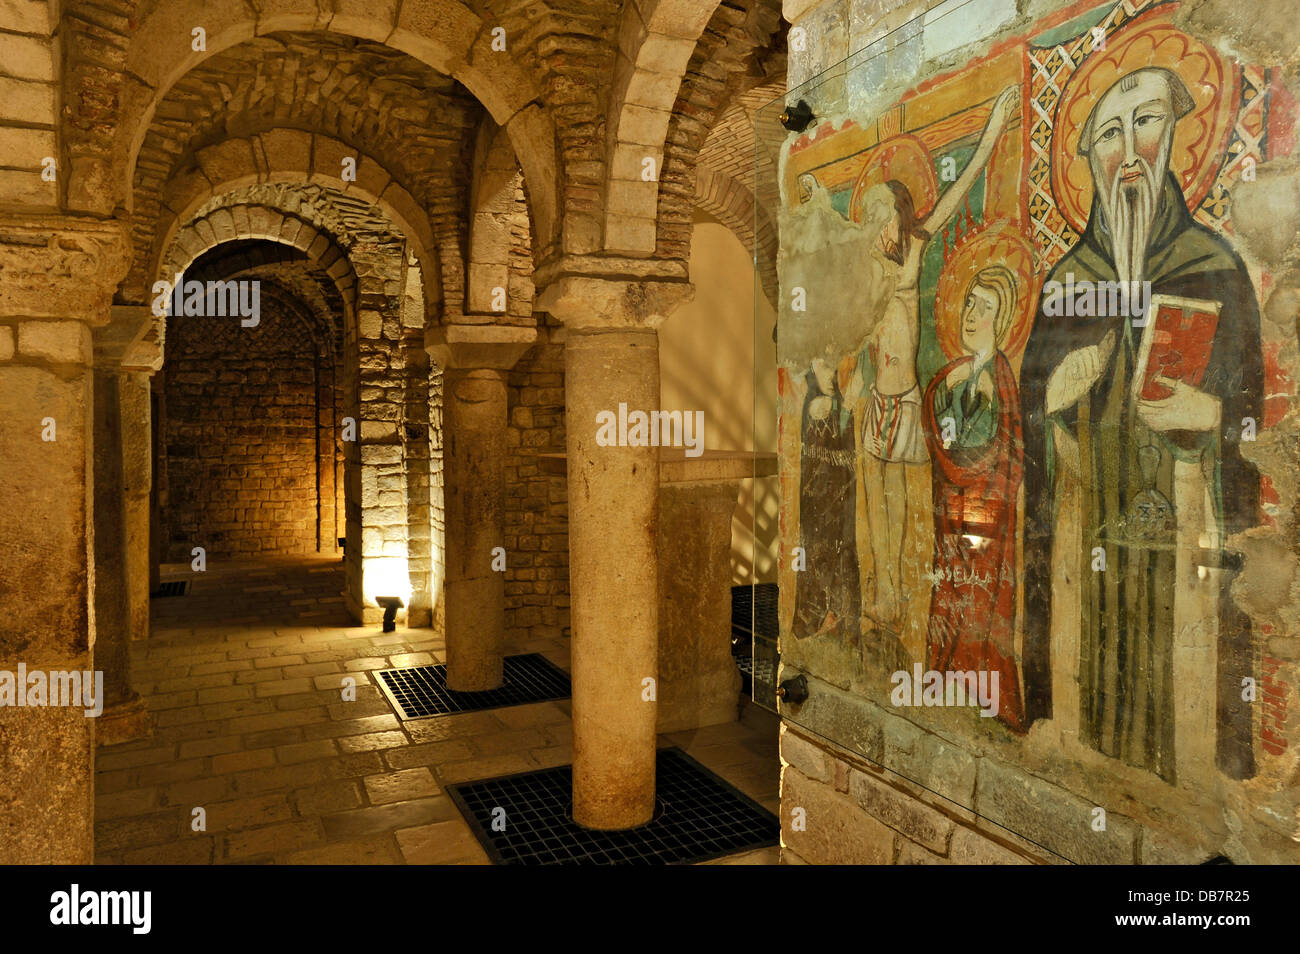 Columnas, arcos, frescos de estilo bizantino, la Cripta de San Casto, siglo IV, la Catedral de Trivento Foto de stock